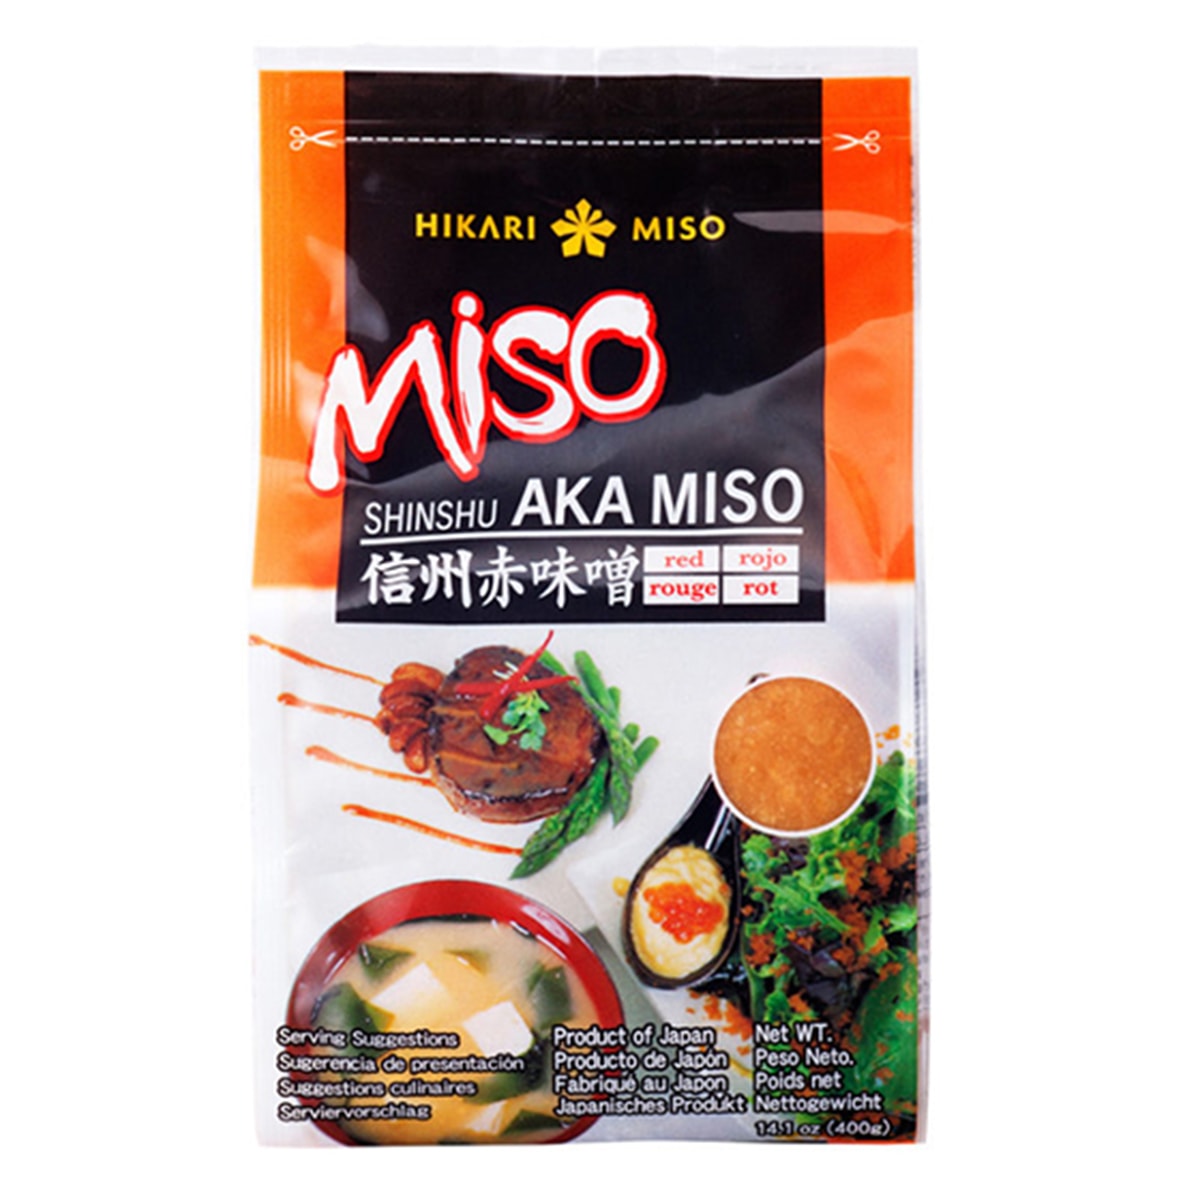 Buy Hikari Red Soya Beans Japanese Miso Paste (Shinshu Aka Miso) - 400 gm